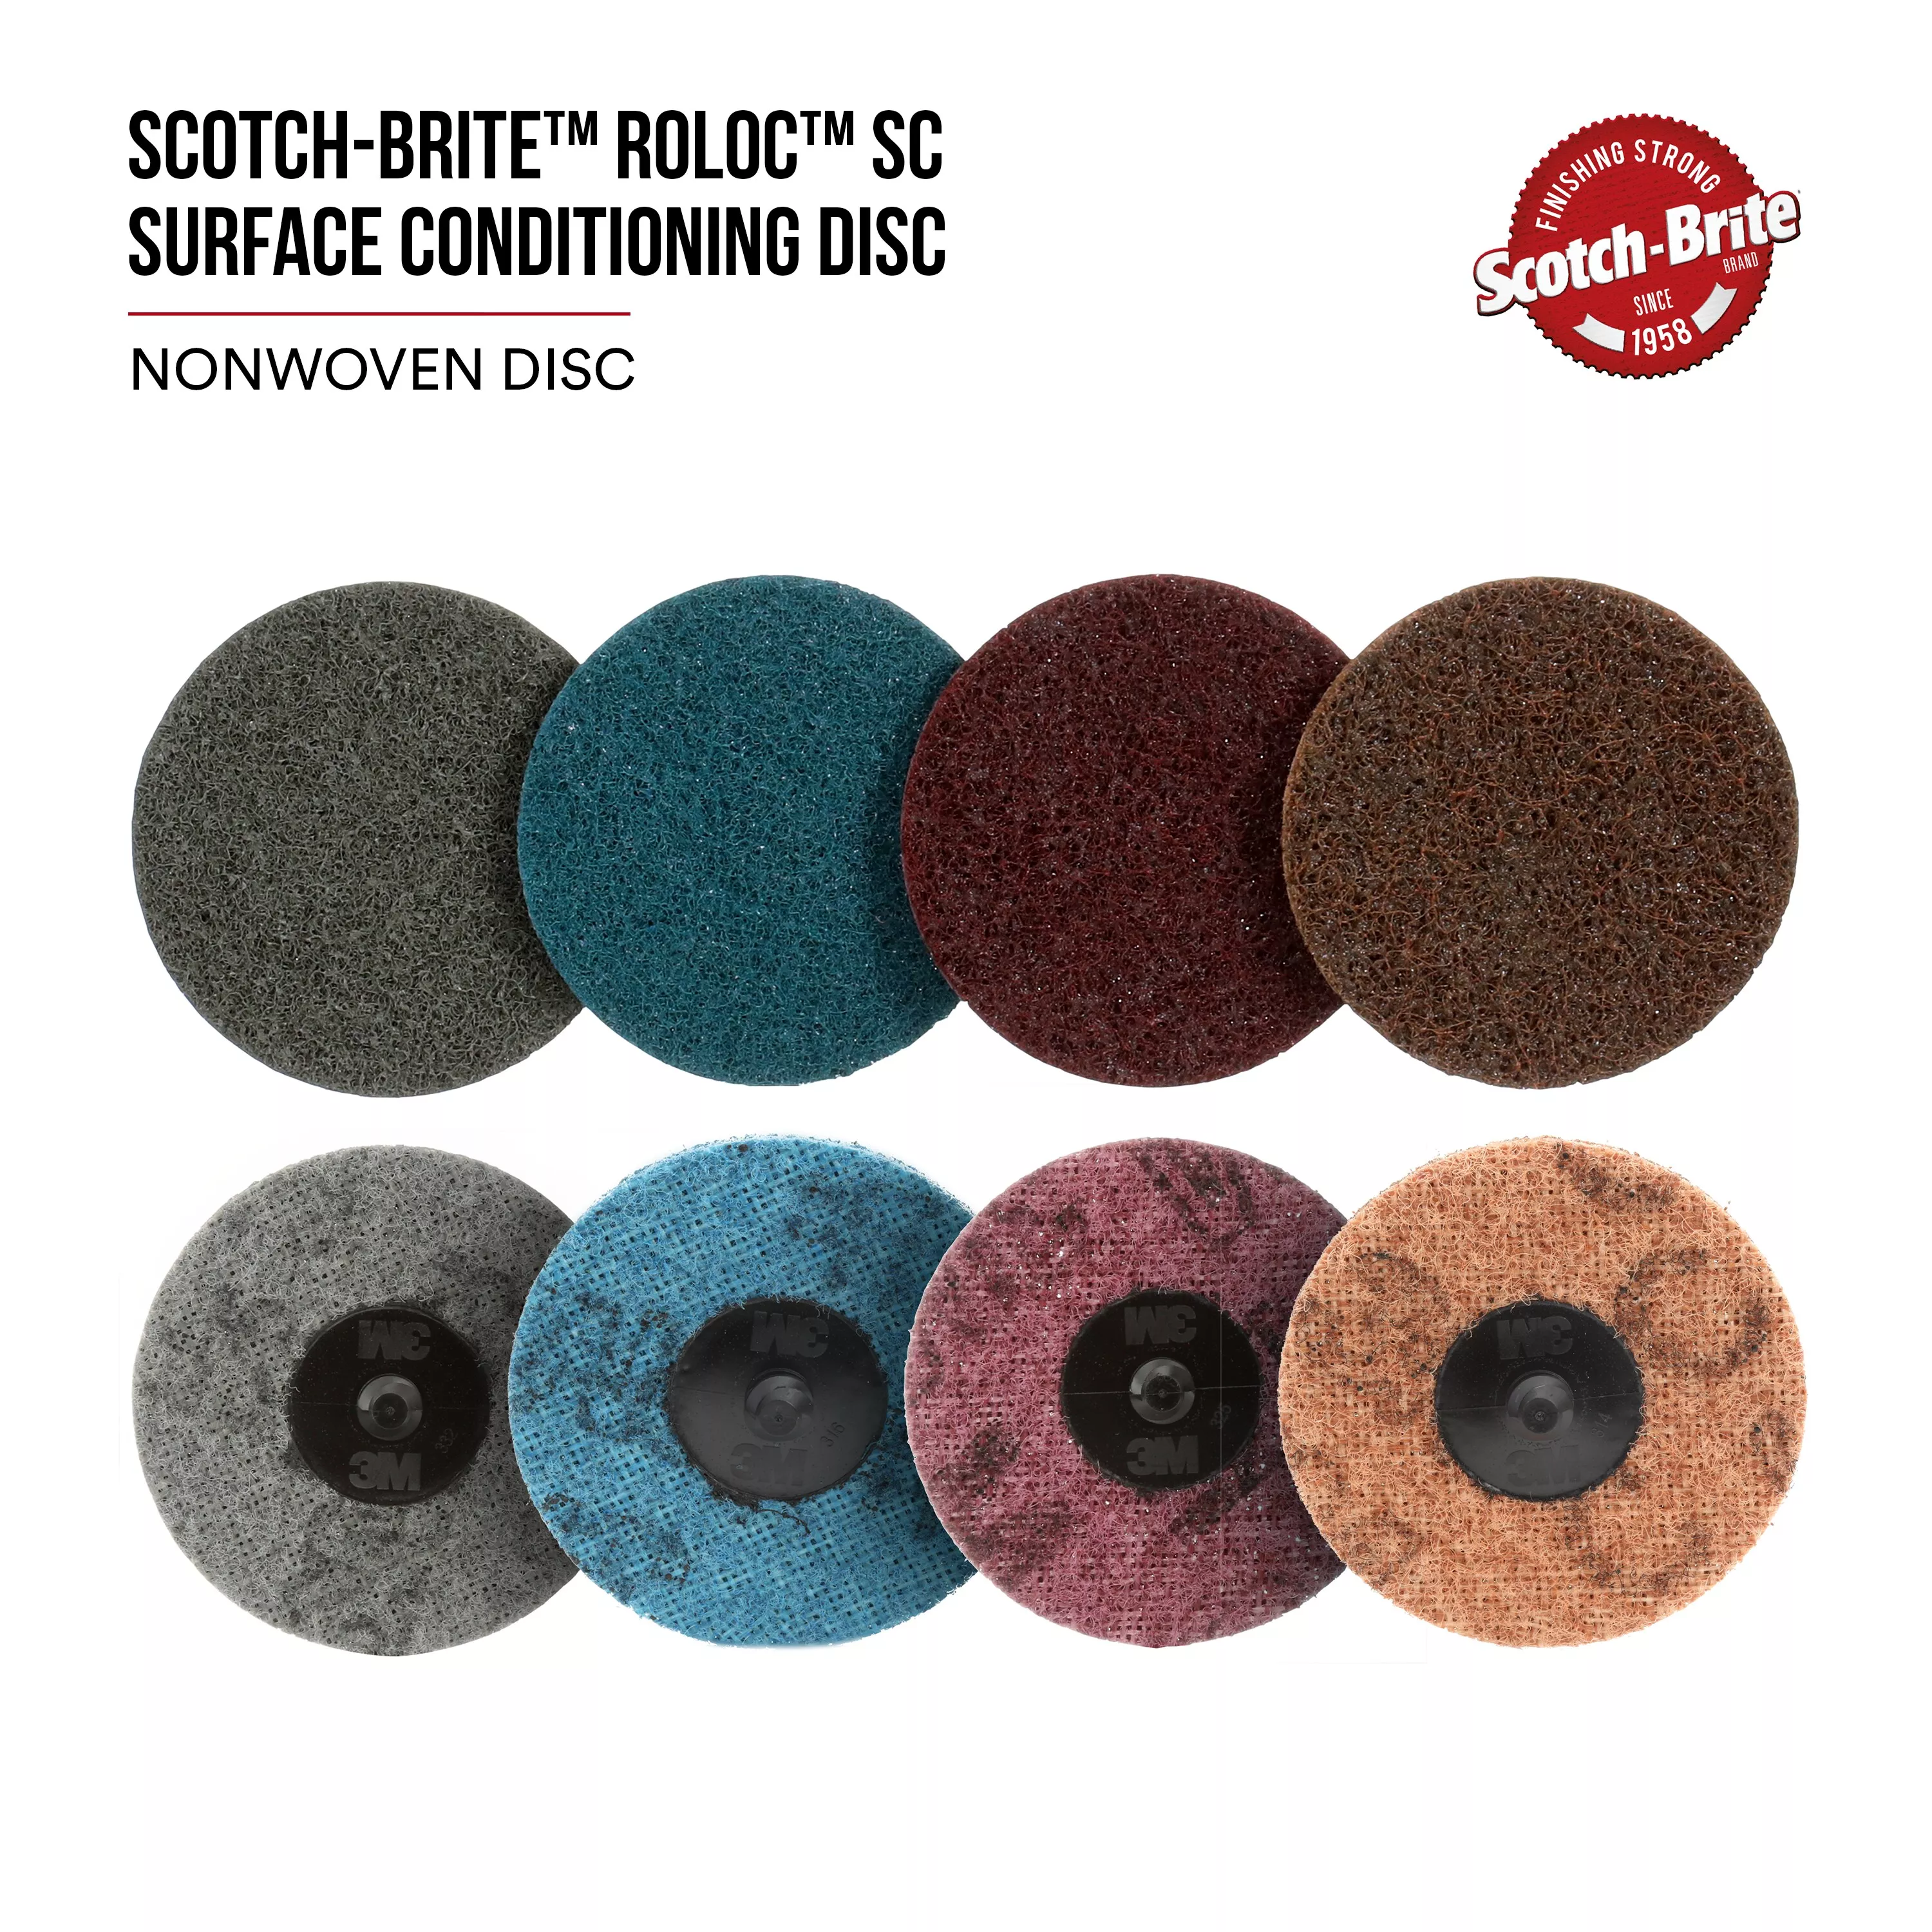 SKU 7000120998 | Scotch-Brite™ Roloc™ Surface Conditioning Disc